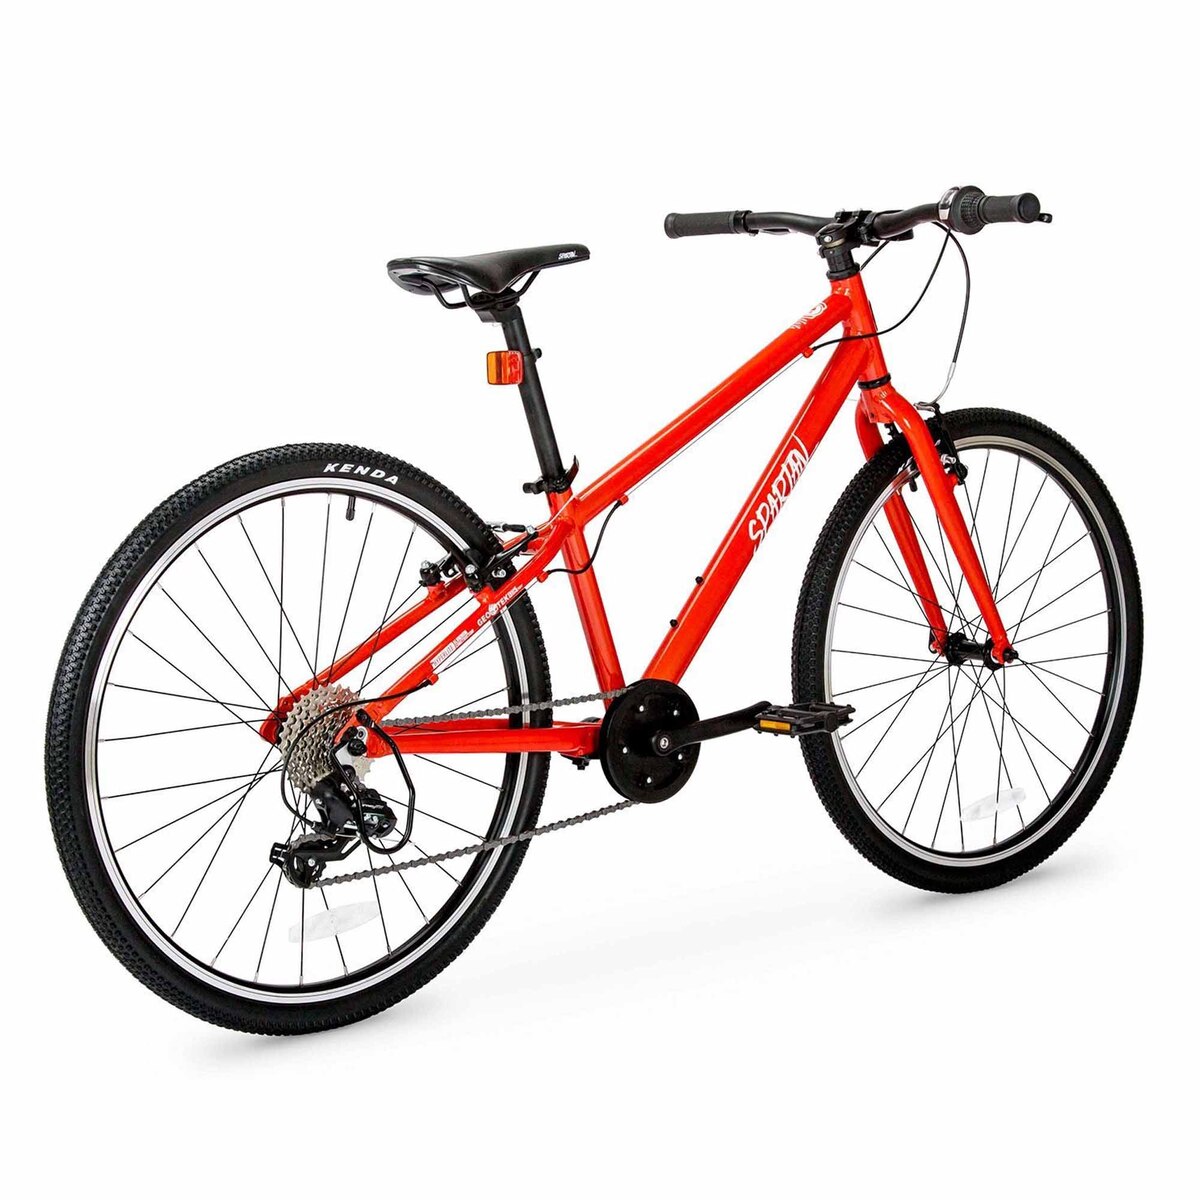 Spartan 26 inches Hyperlite Alloy Bicycle, Orange, SP-3146